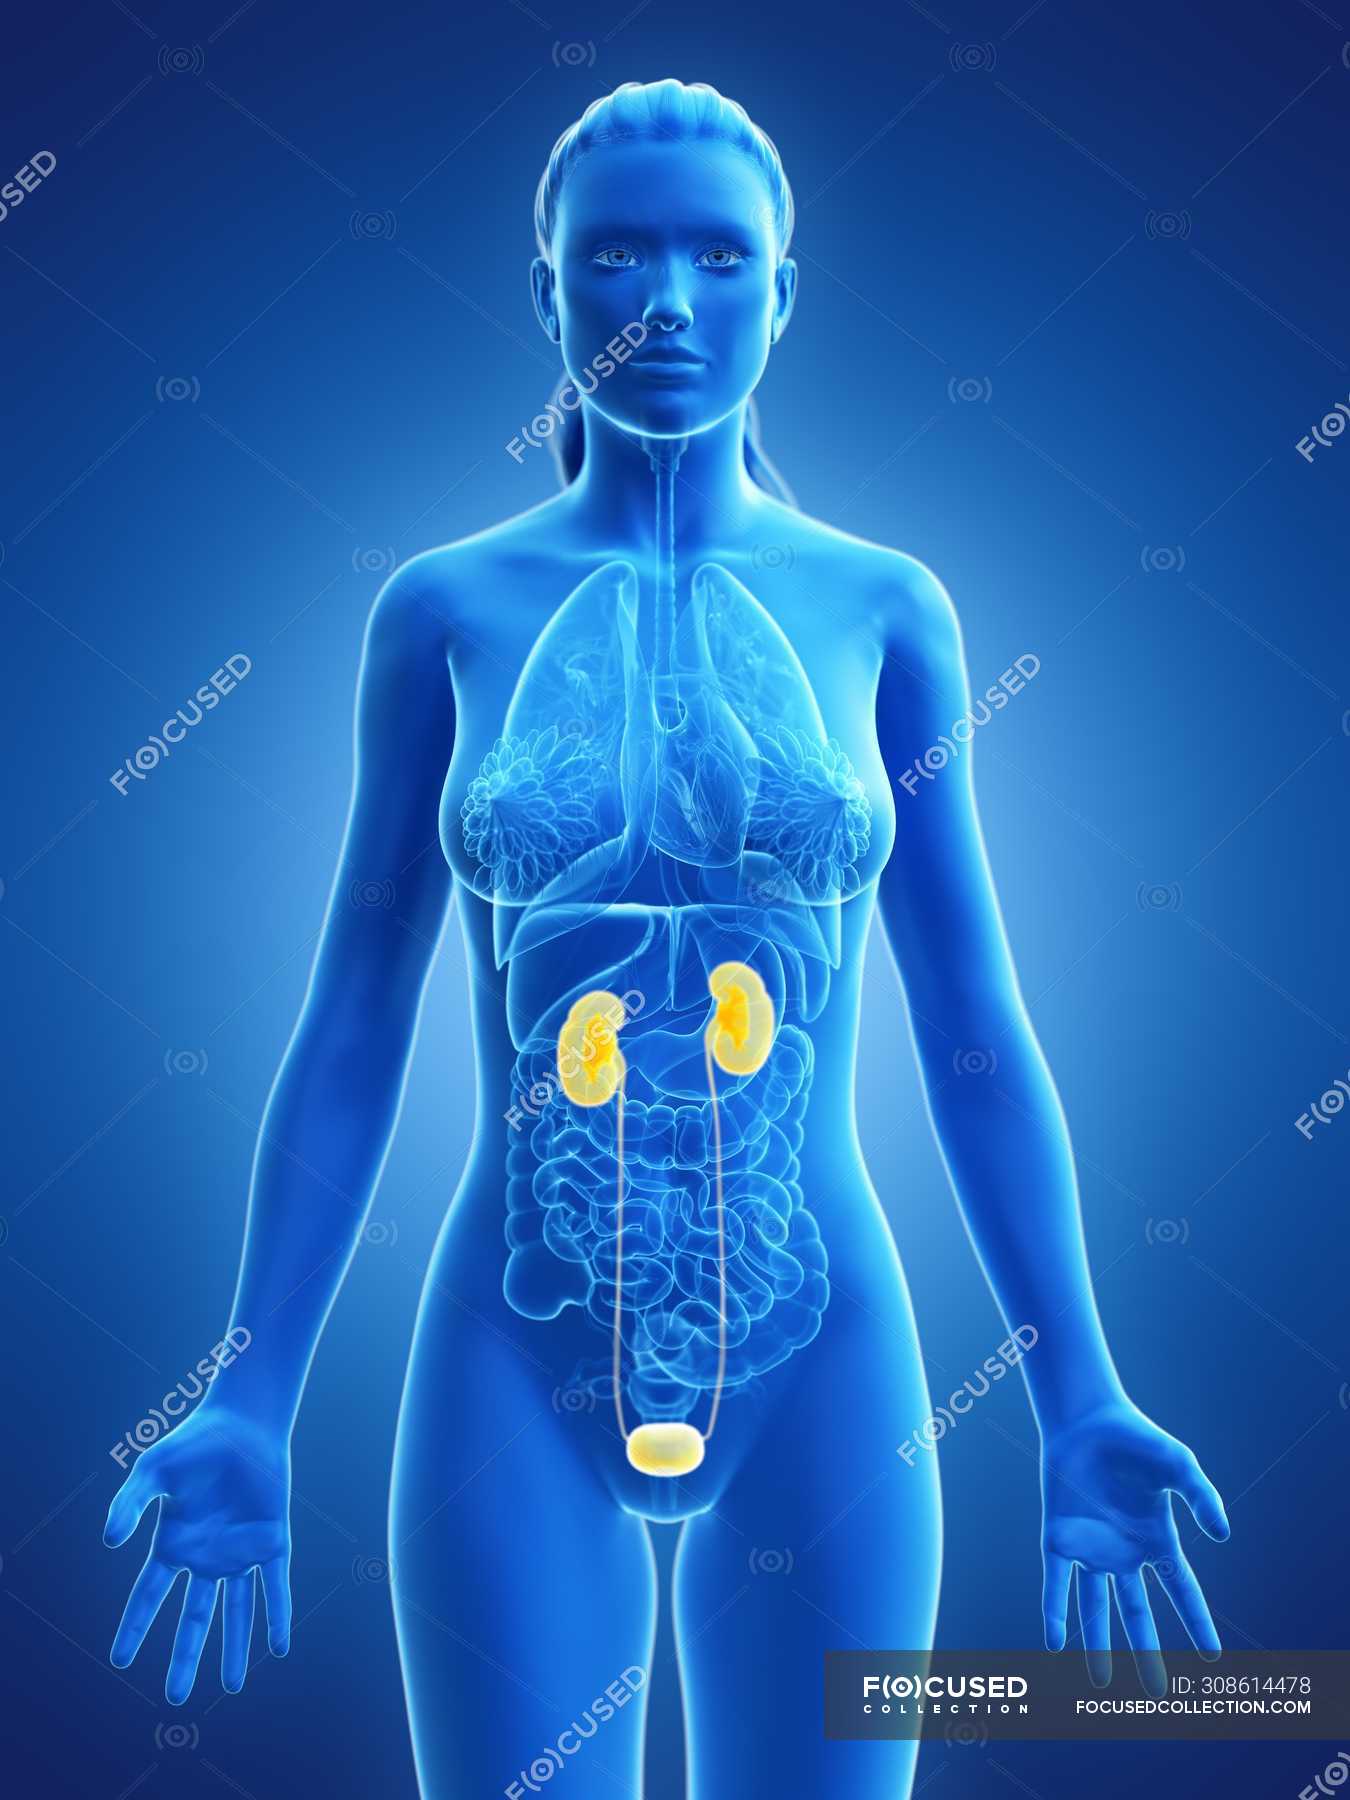 female urinary system model